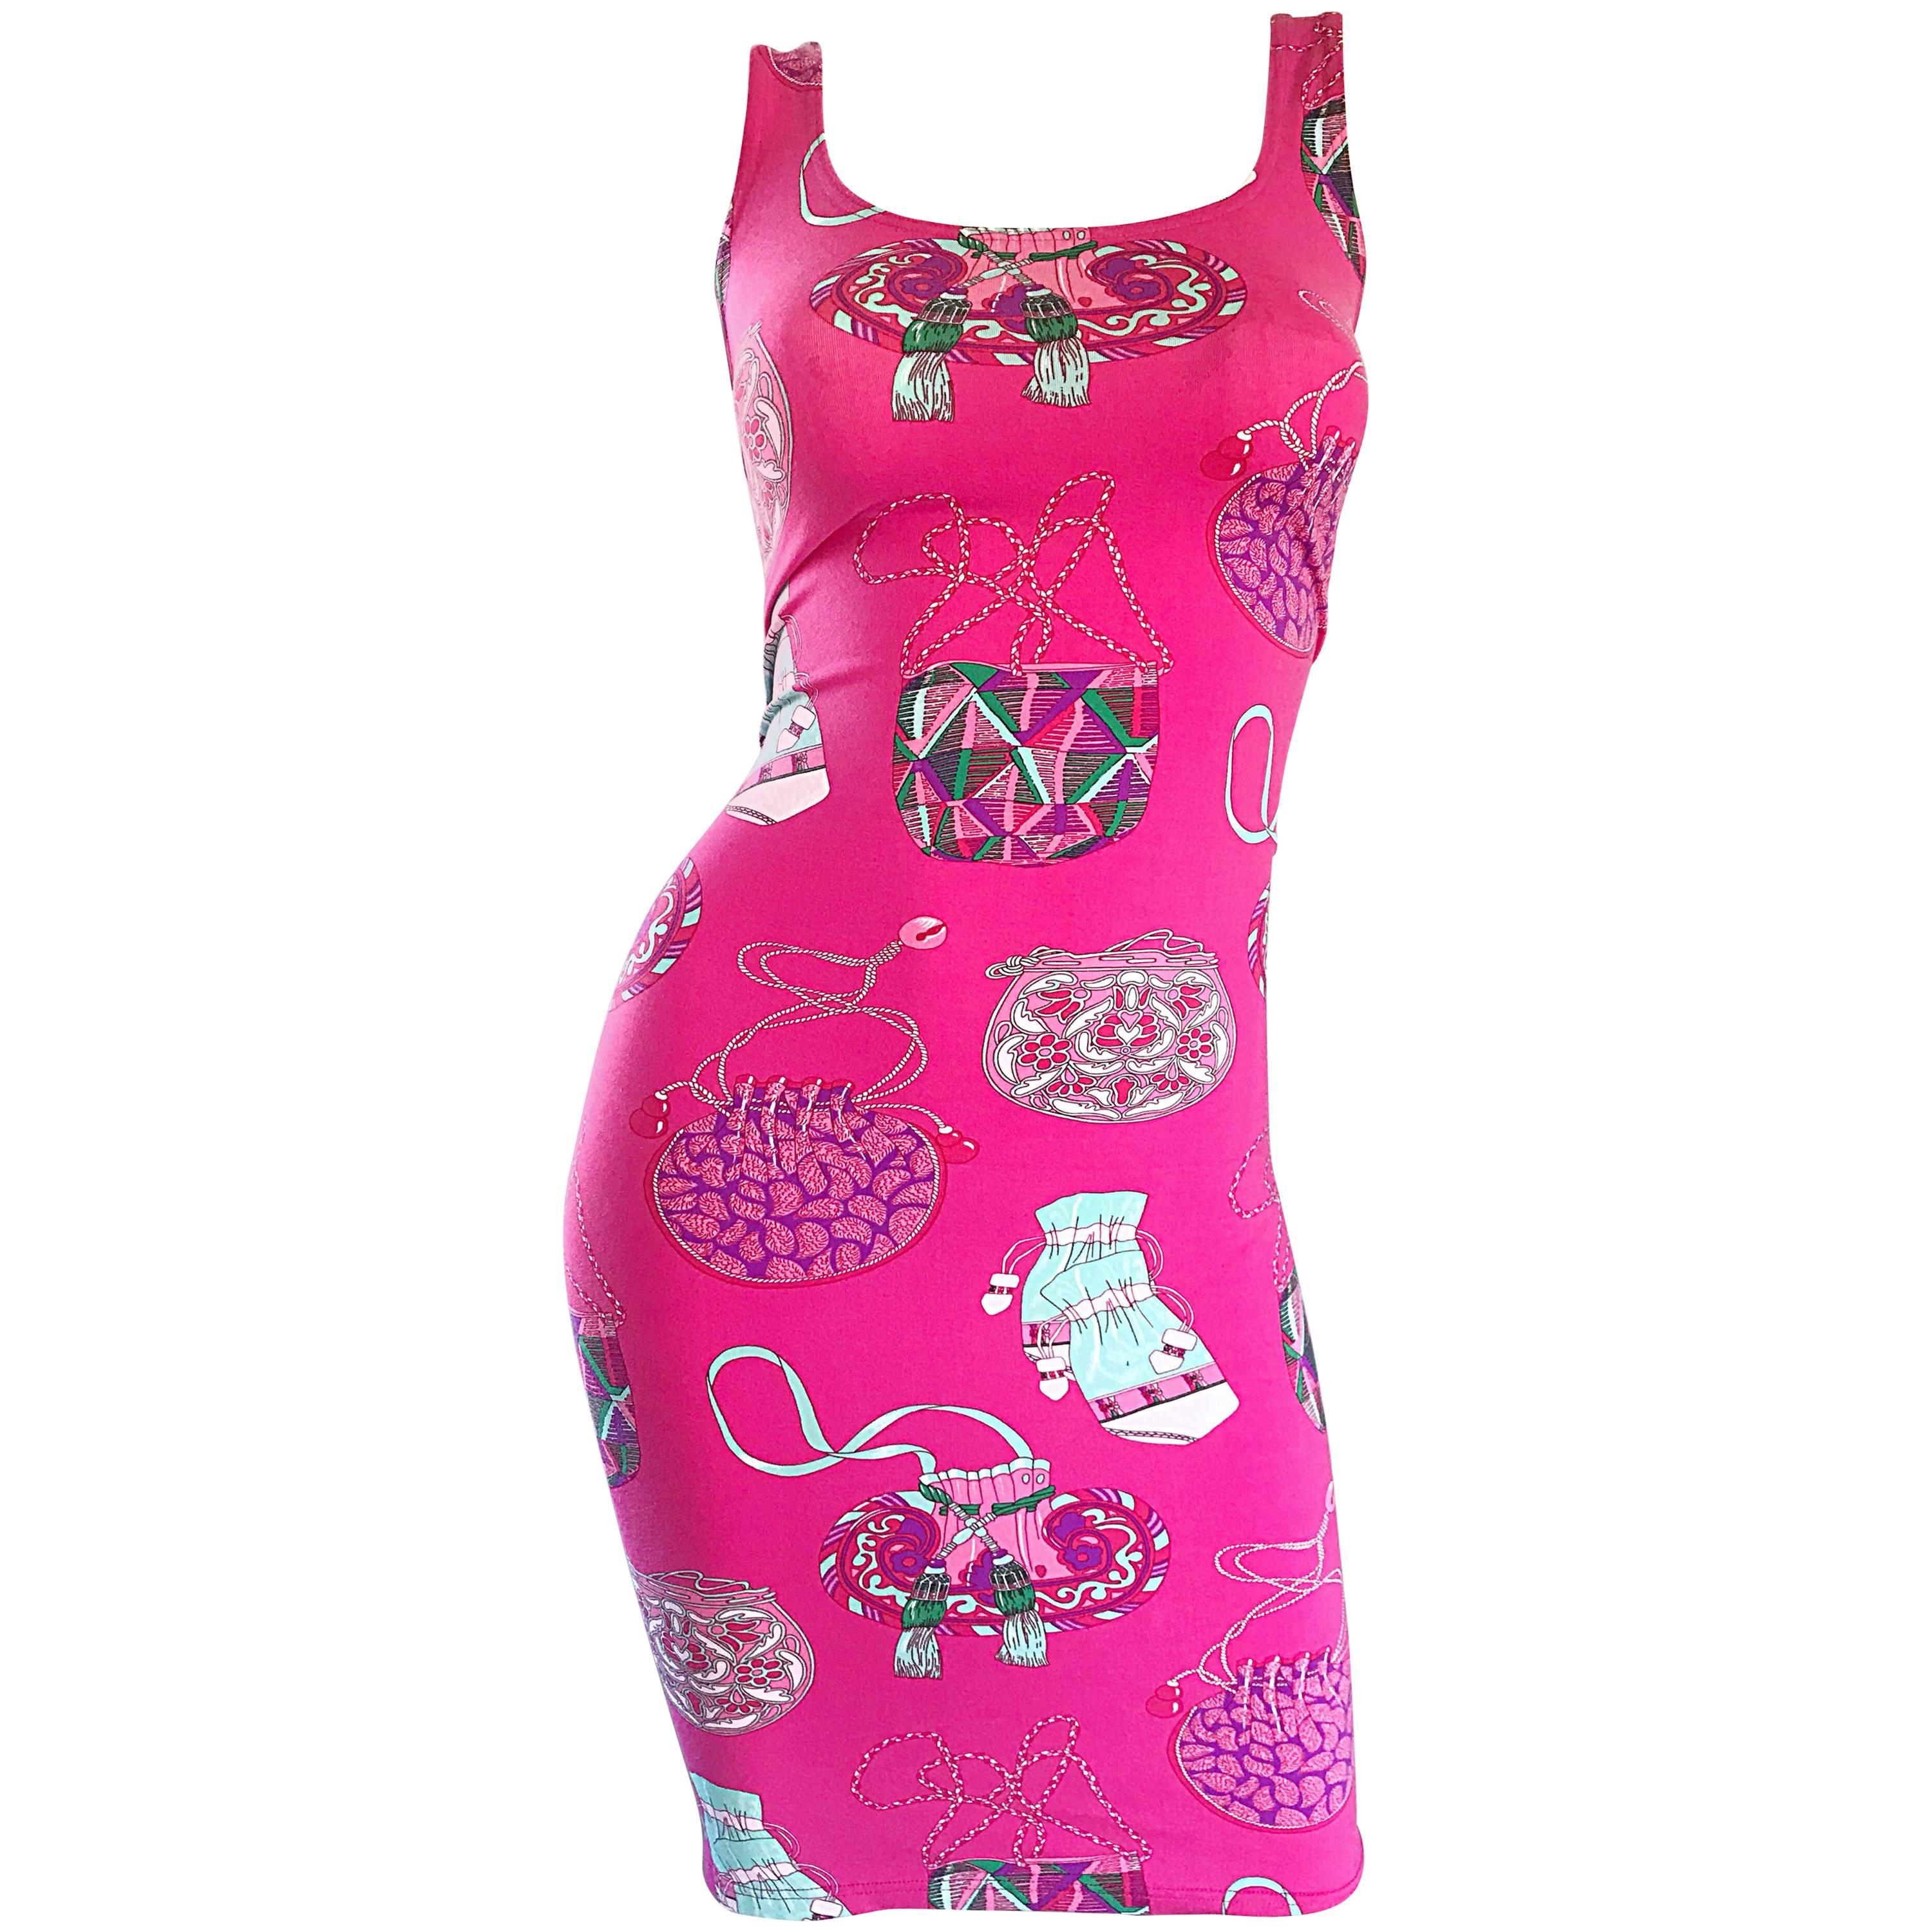 New Manuel Canovas 1990s Hot Pink Purse Handbag Novelty Print 90s Bodycon Dress